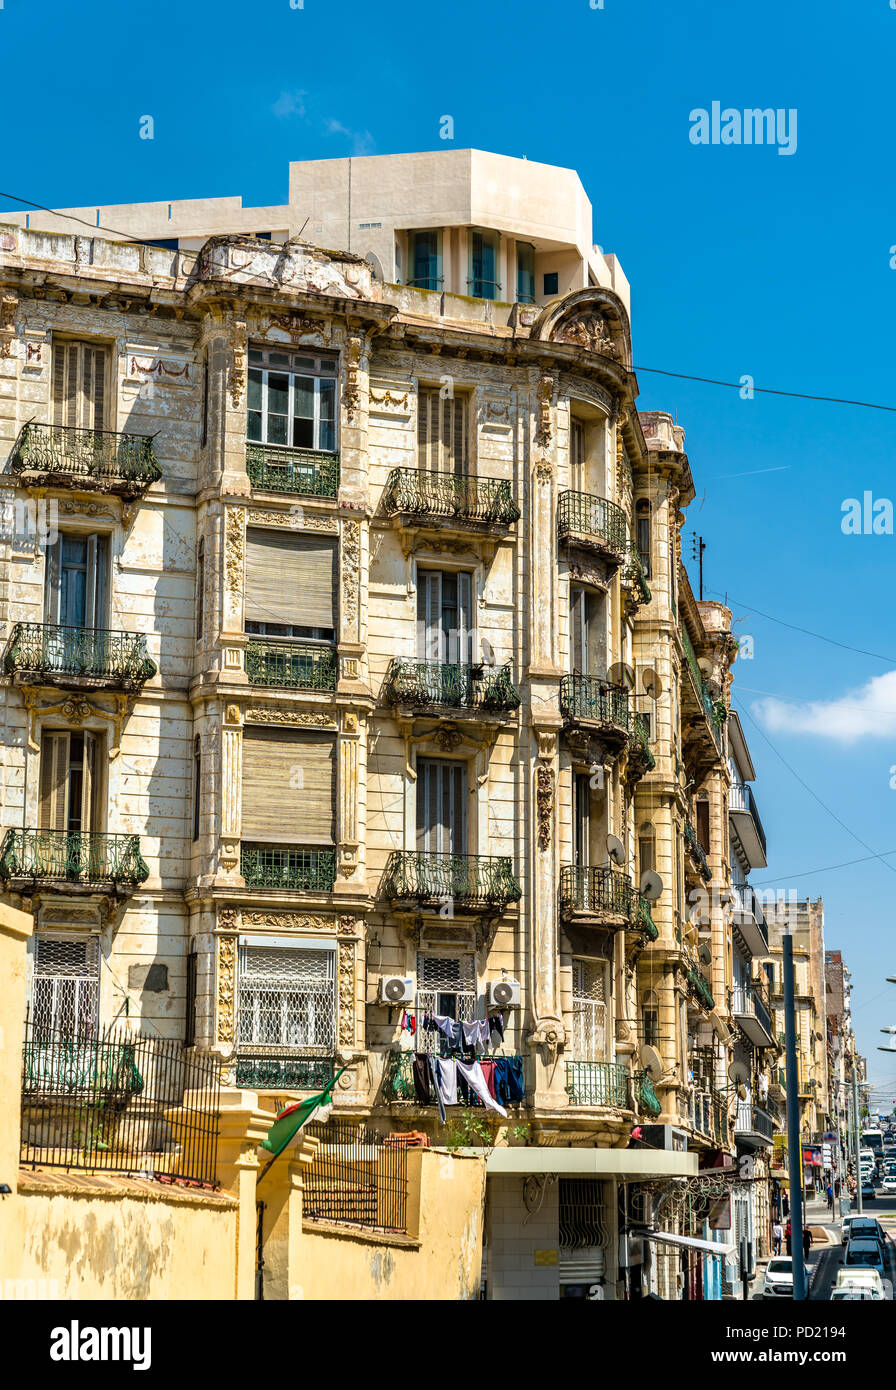 Buildings in Oran, a major city in Algeria Stock Photo